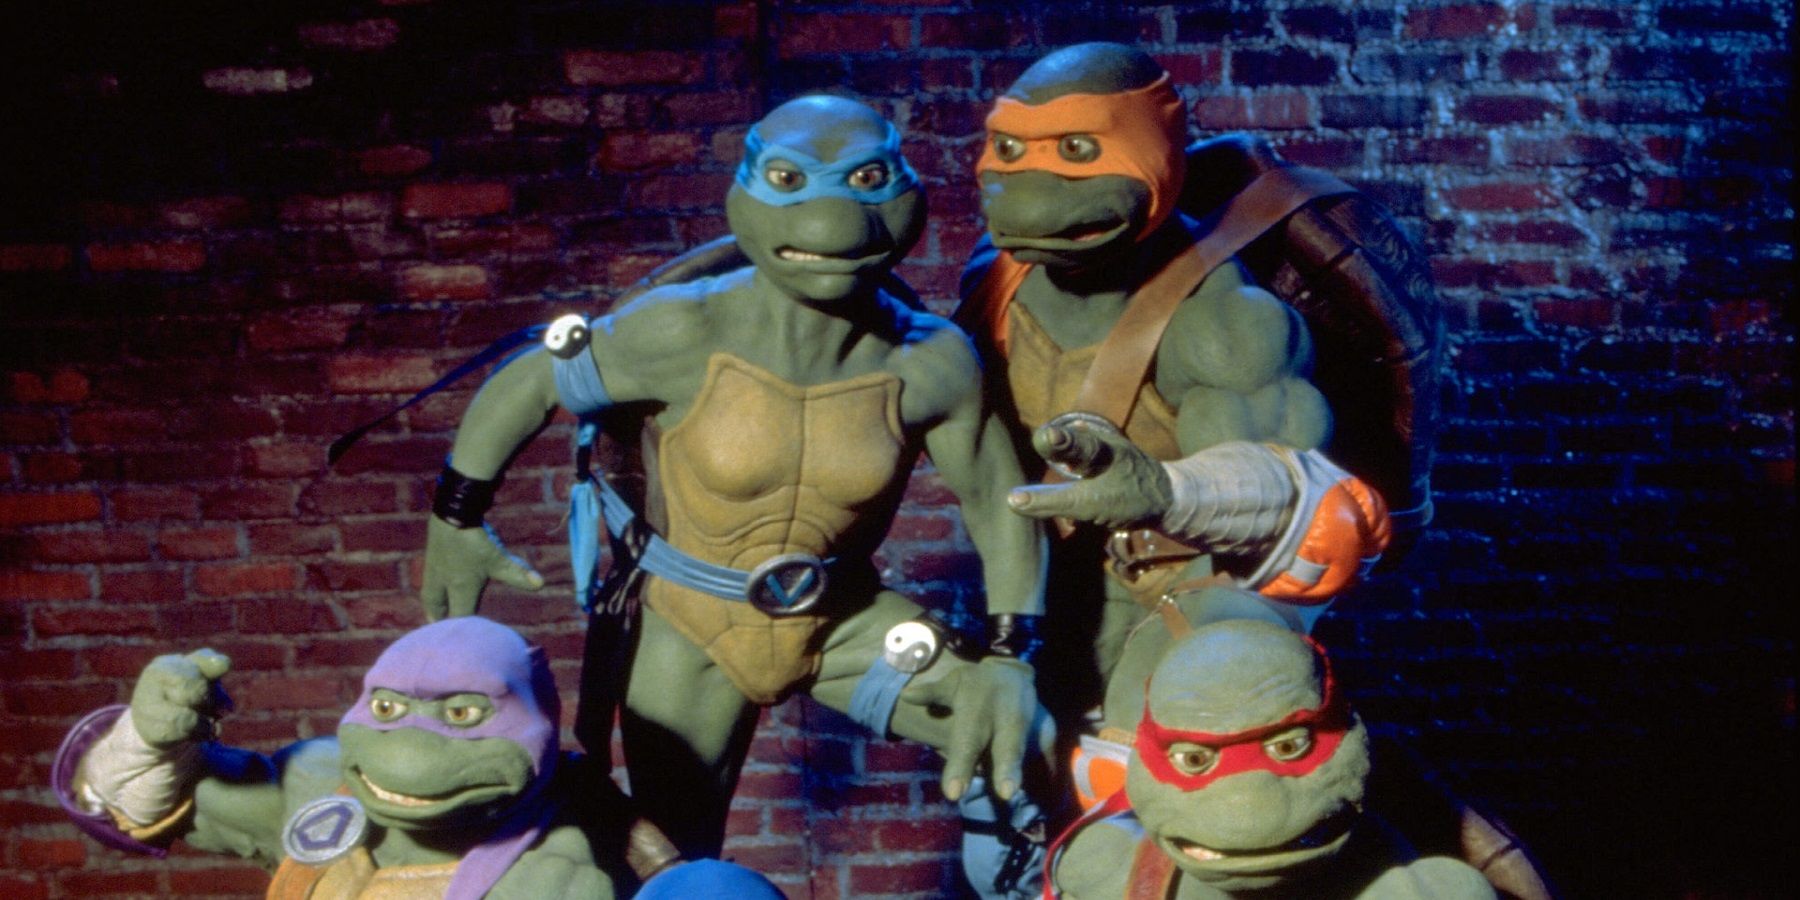 Donatello, Venus de Milo, Michelangelo and Raphael posing for Battle in Ninja Turtles: The Next Mutation